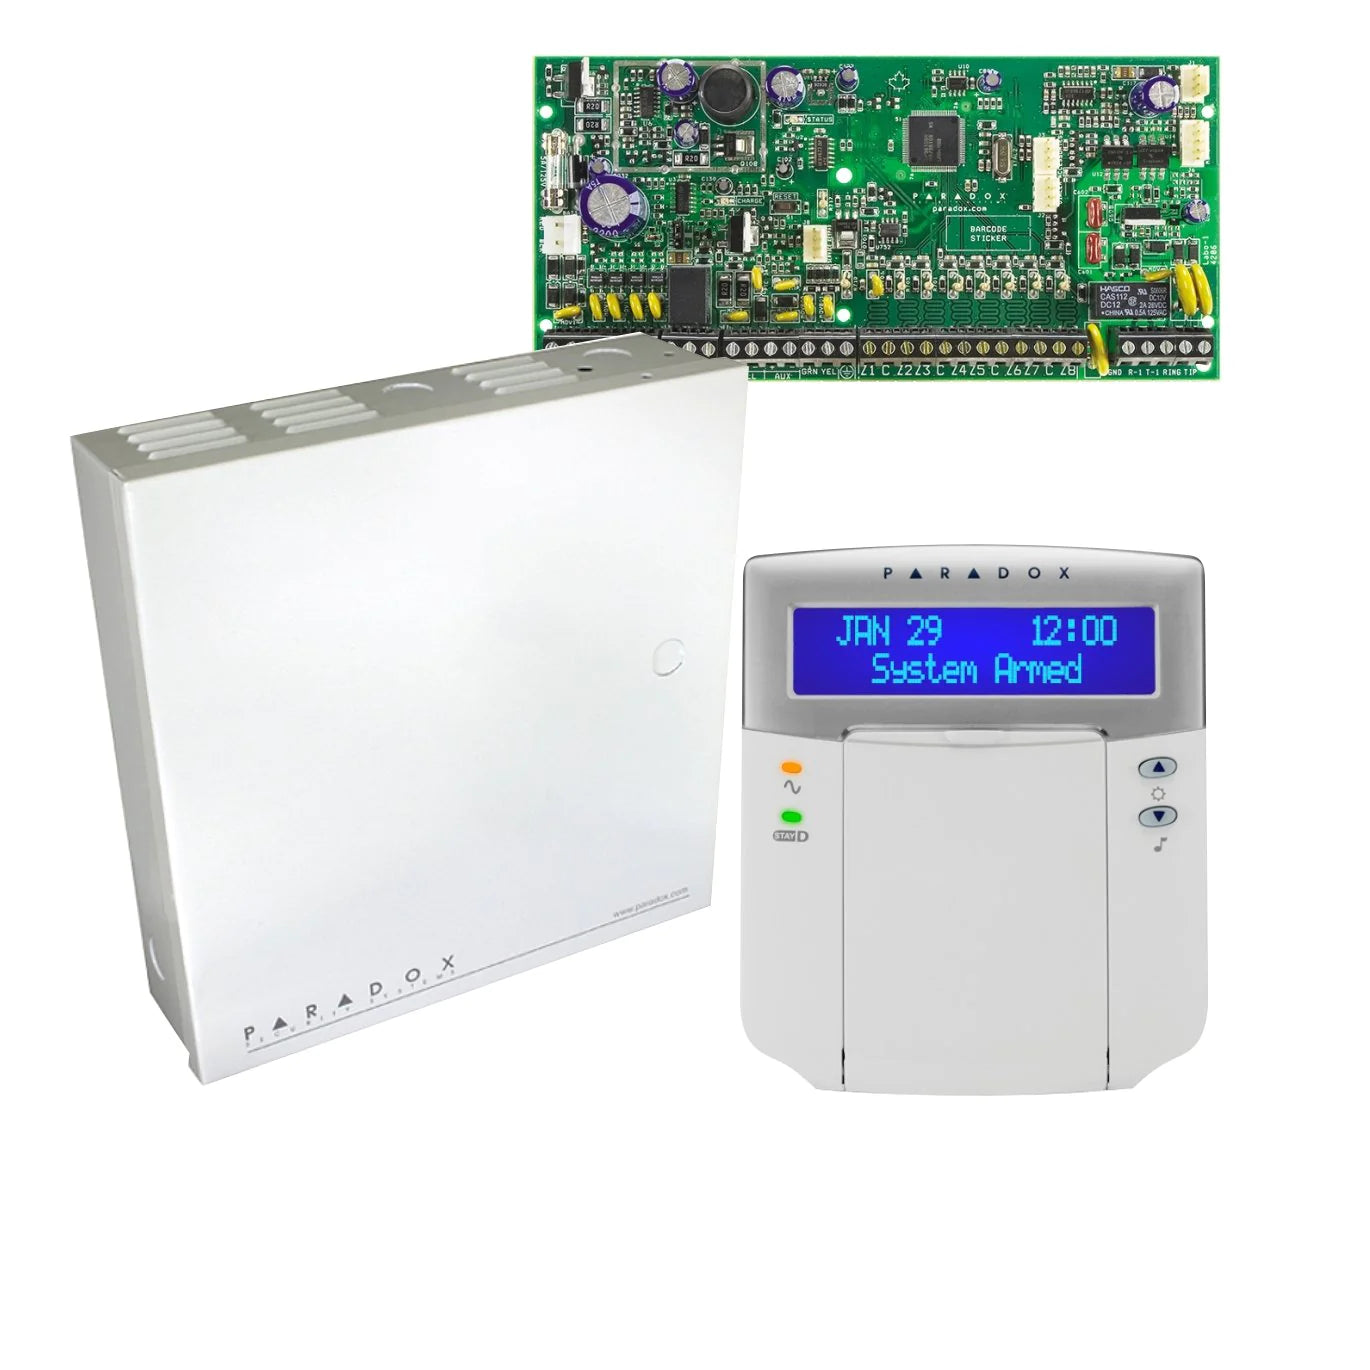 SP6000 / K32 LCD K/P Upgrade 8 Zone M/BOX Kit (PA9050)